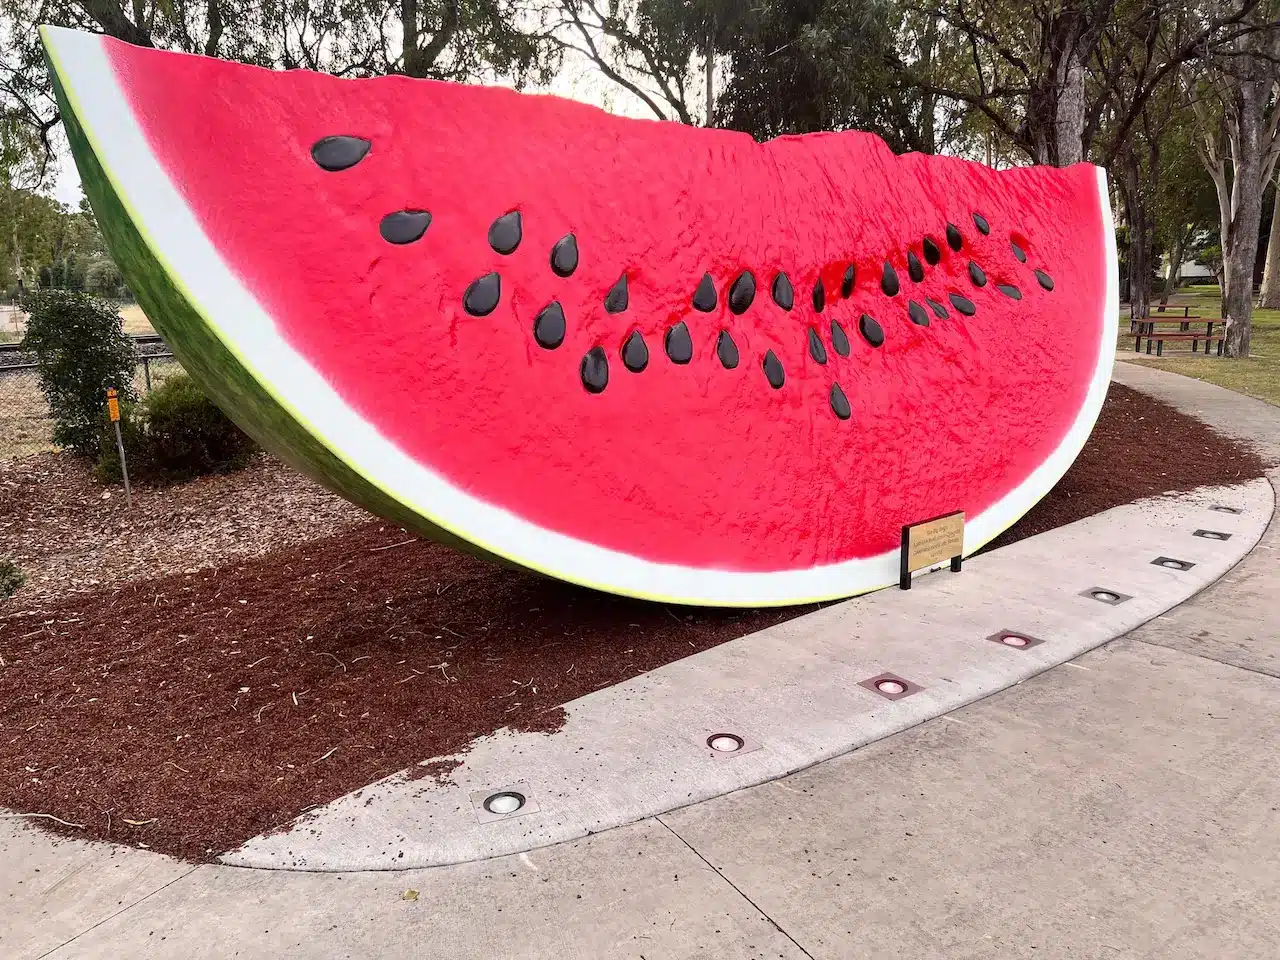 The Big Melon Sculpture in Queensland Australia